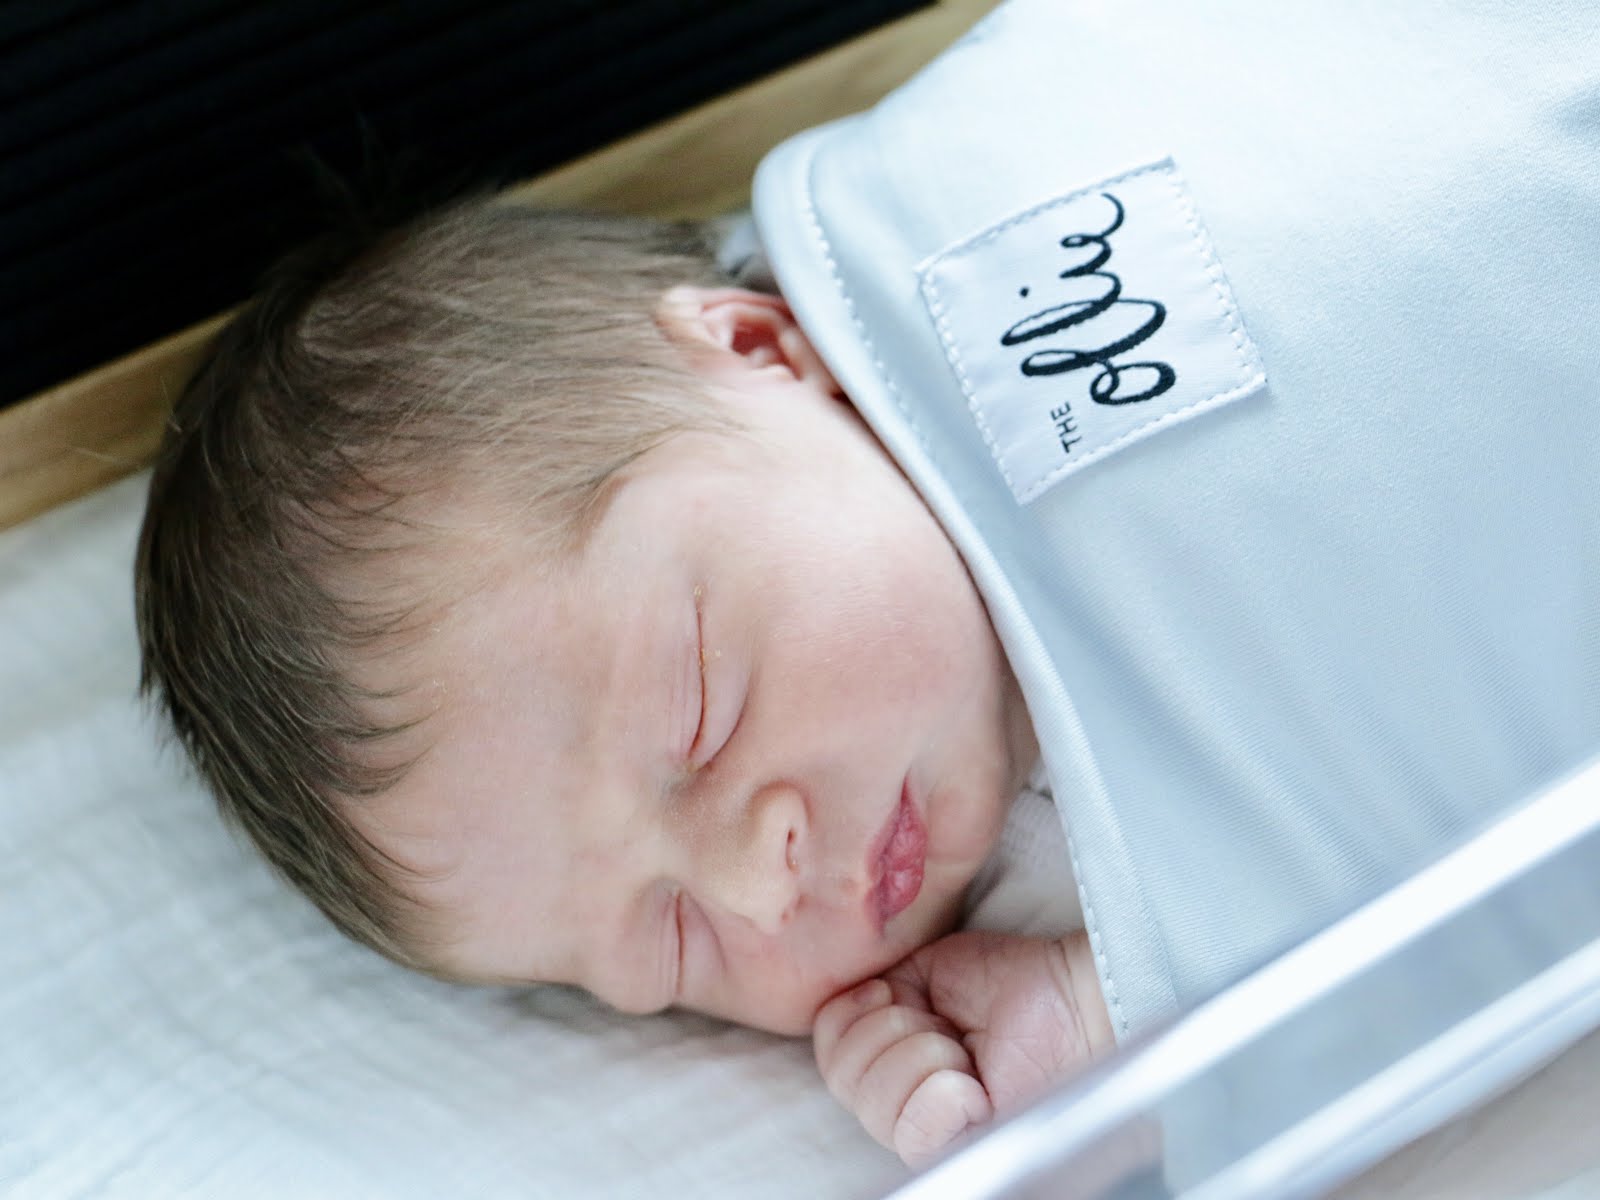 Baby-Sebastian-Matteo-is-Here-My-Little-Prince-Vivi-Brizuela